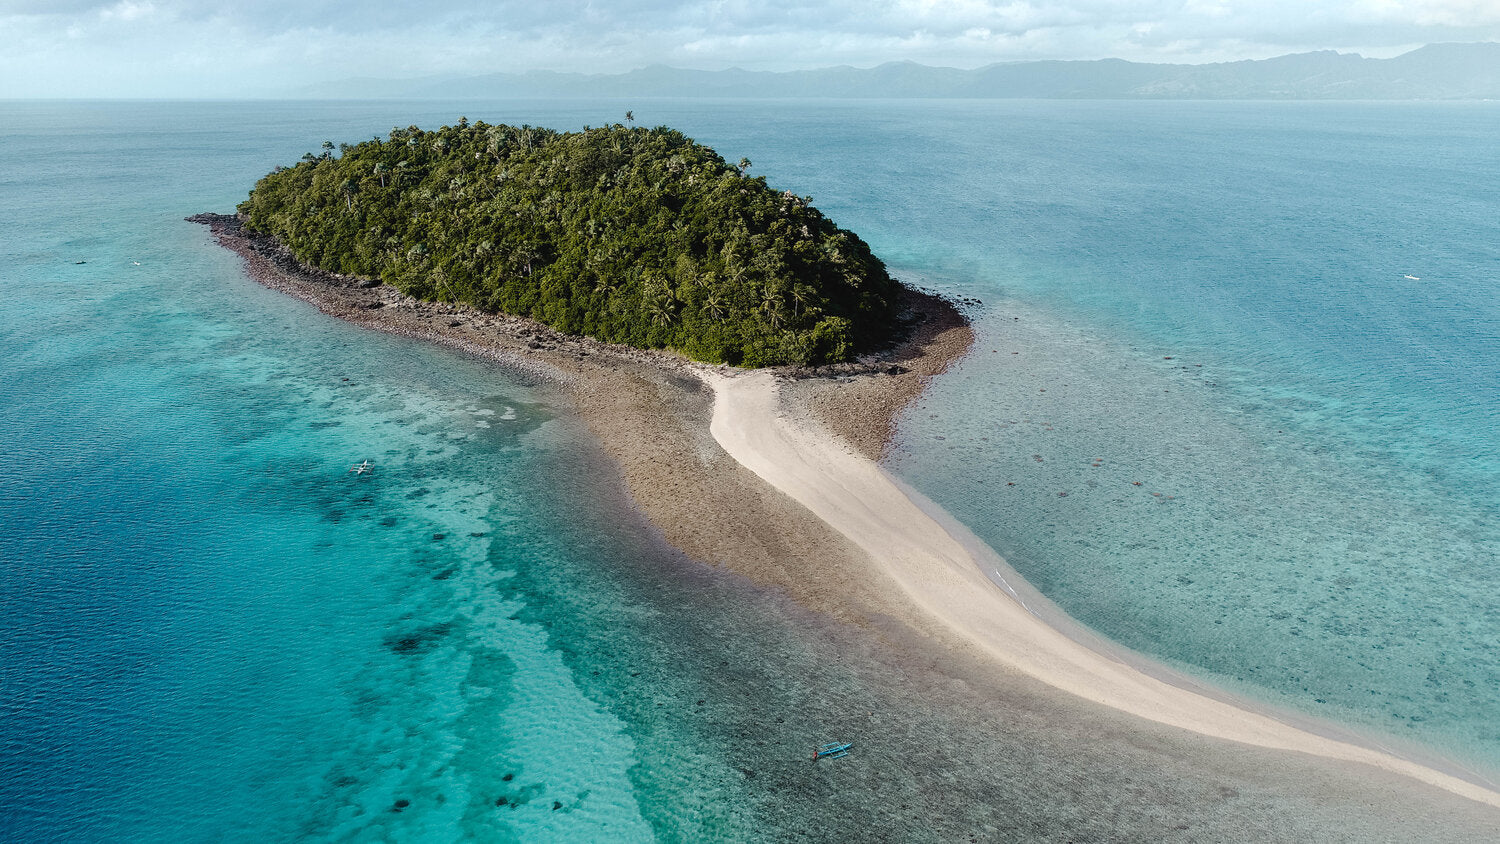 Drone shot of Bon Bon beach in Romblon, Philippines